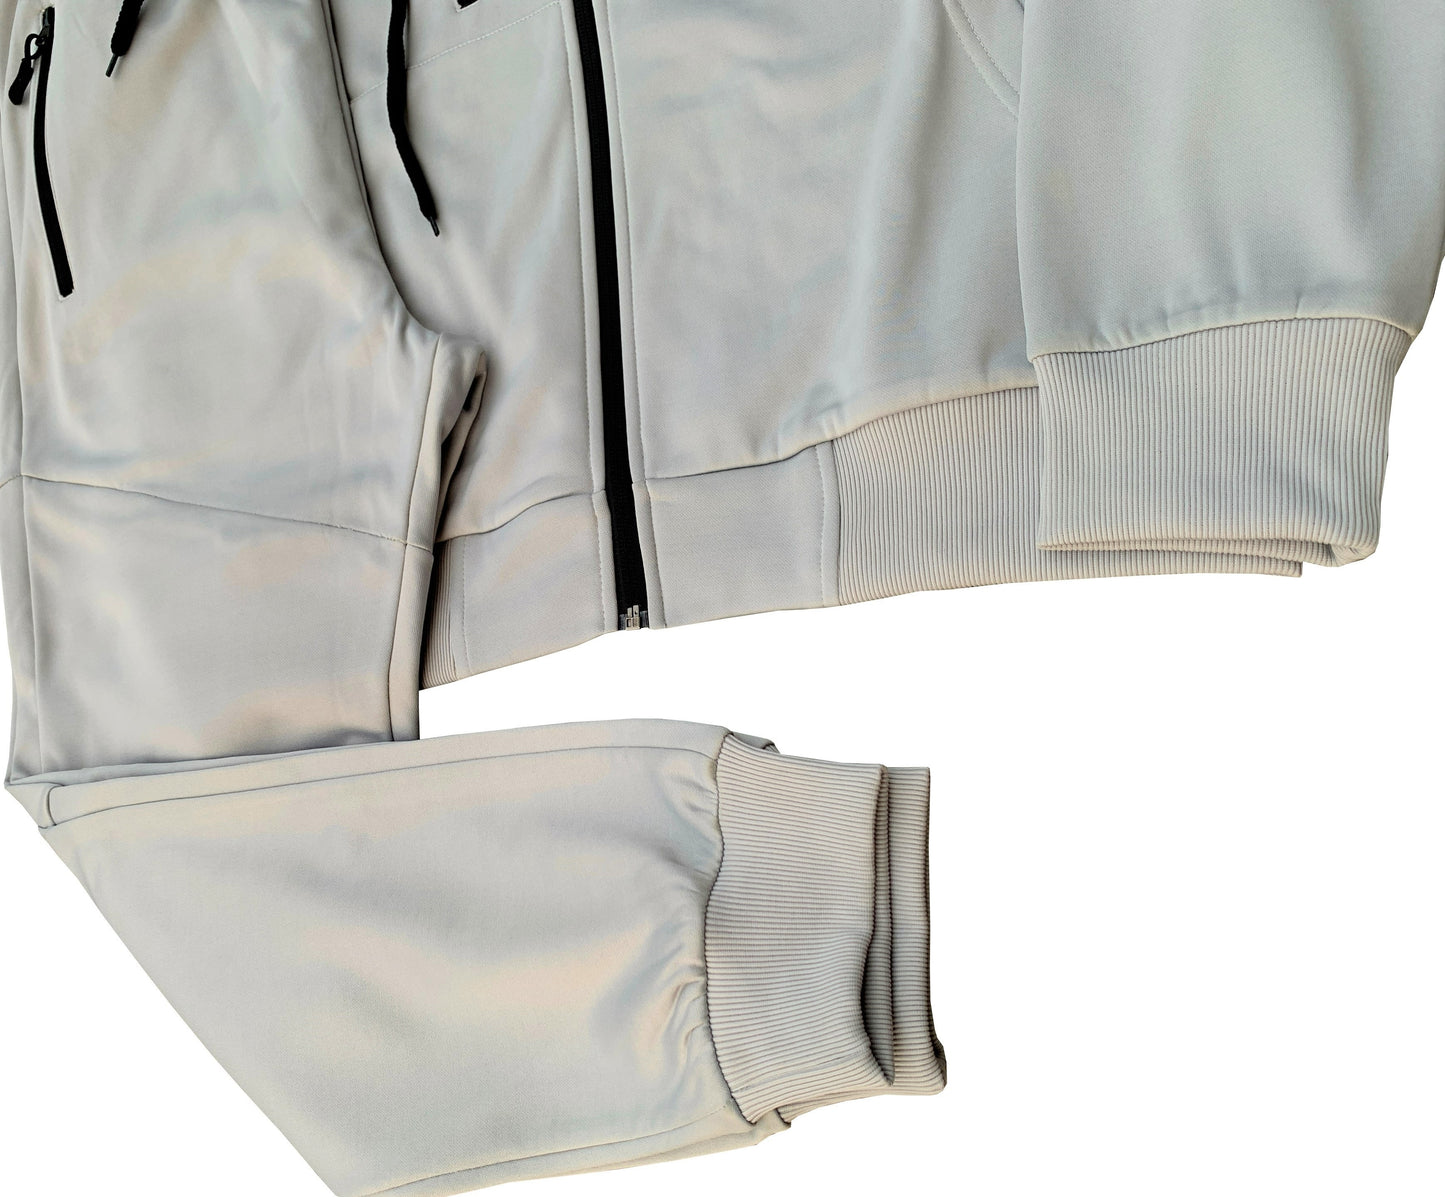 Royal Threads Canada Men’s Warm Winter Tech Fleece Sweat Jacket Sweatpants Jogger Outfit